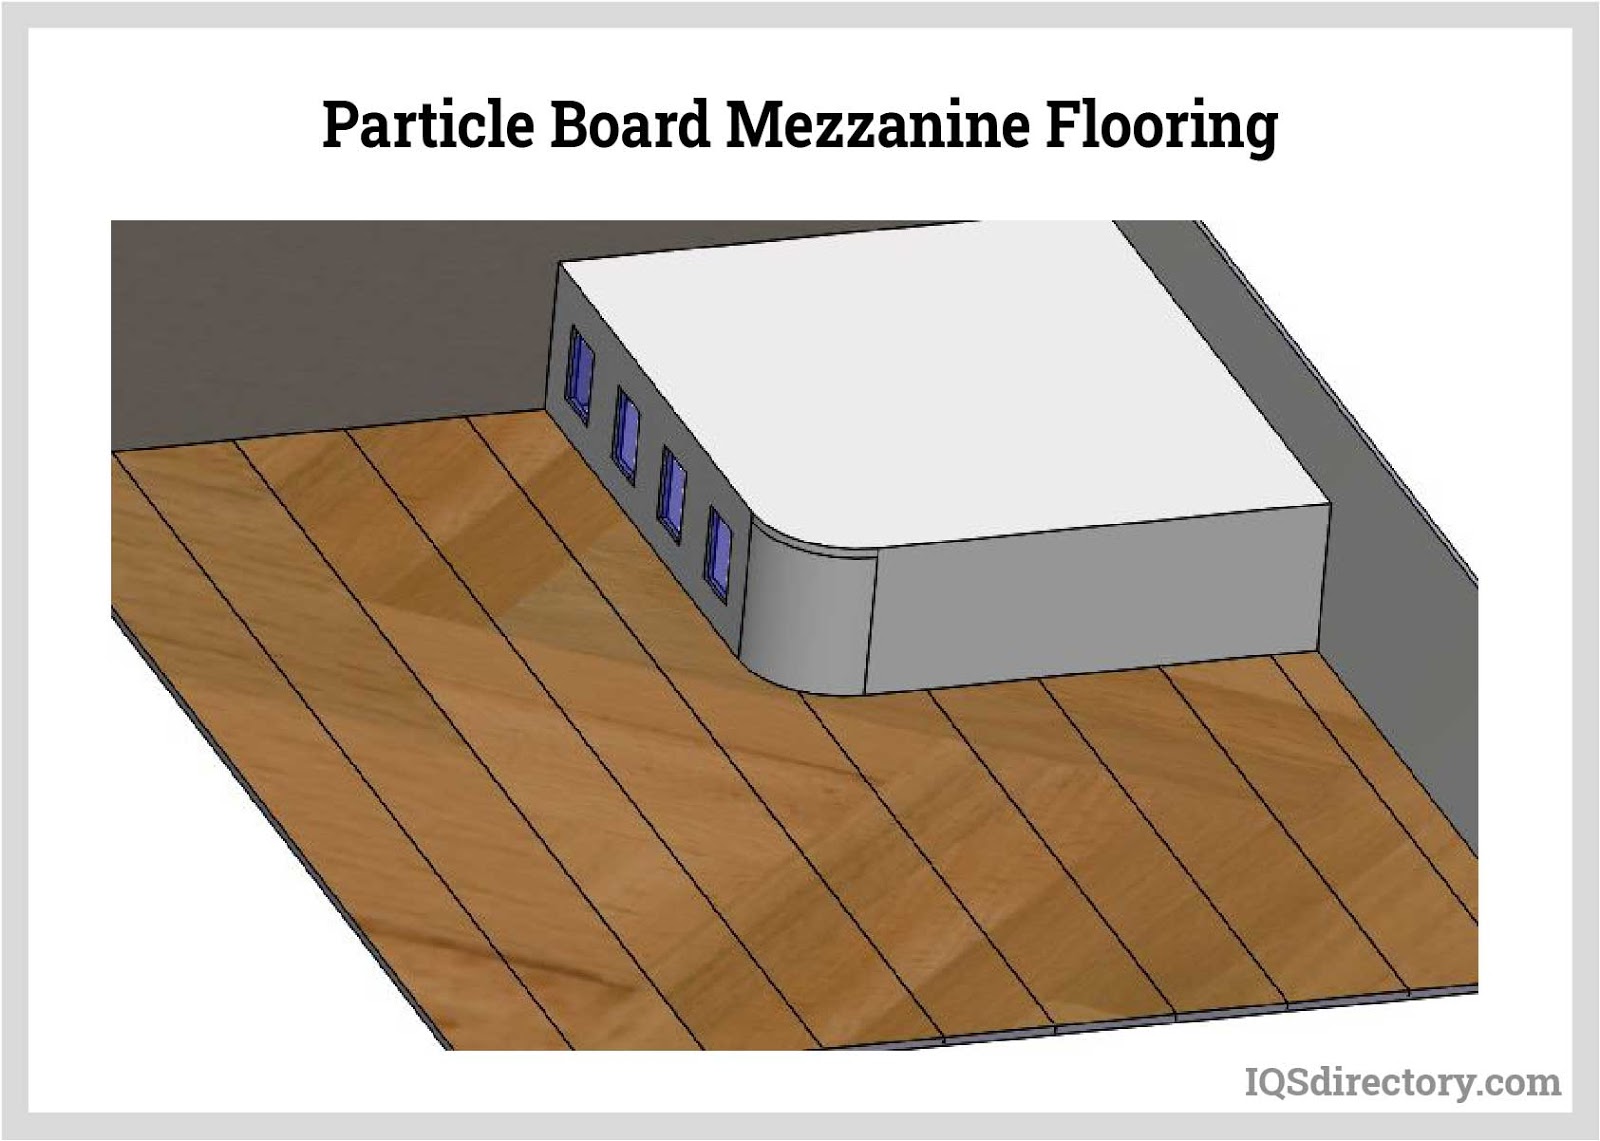 Particle Board Mezzanine Flooring